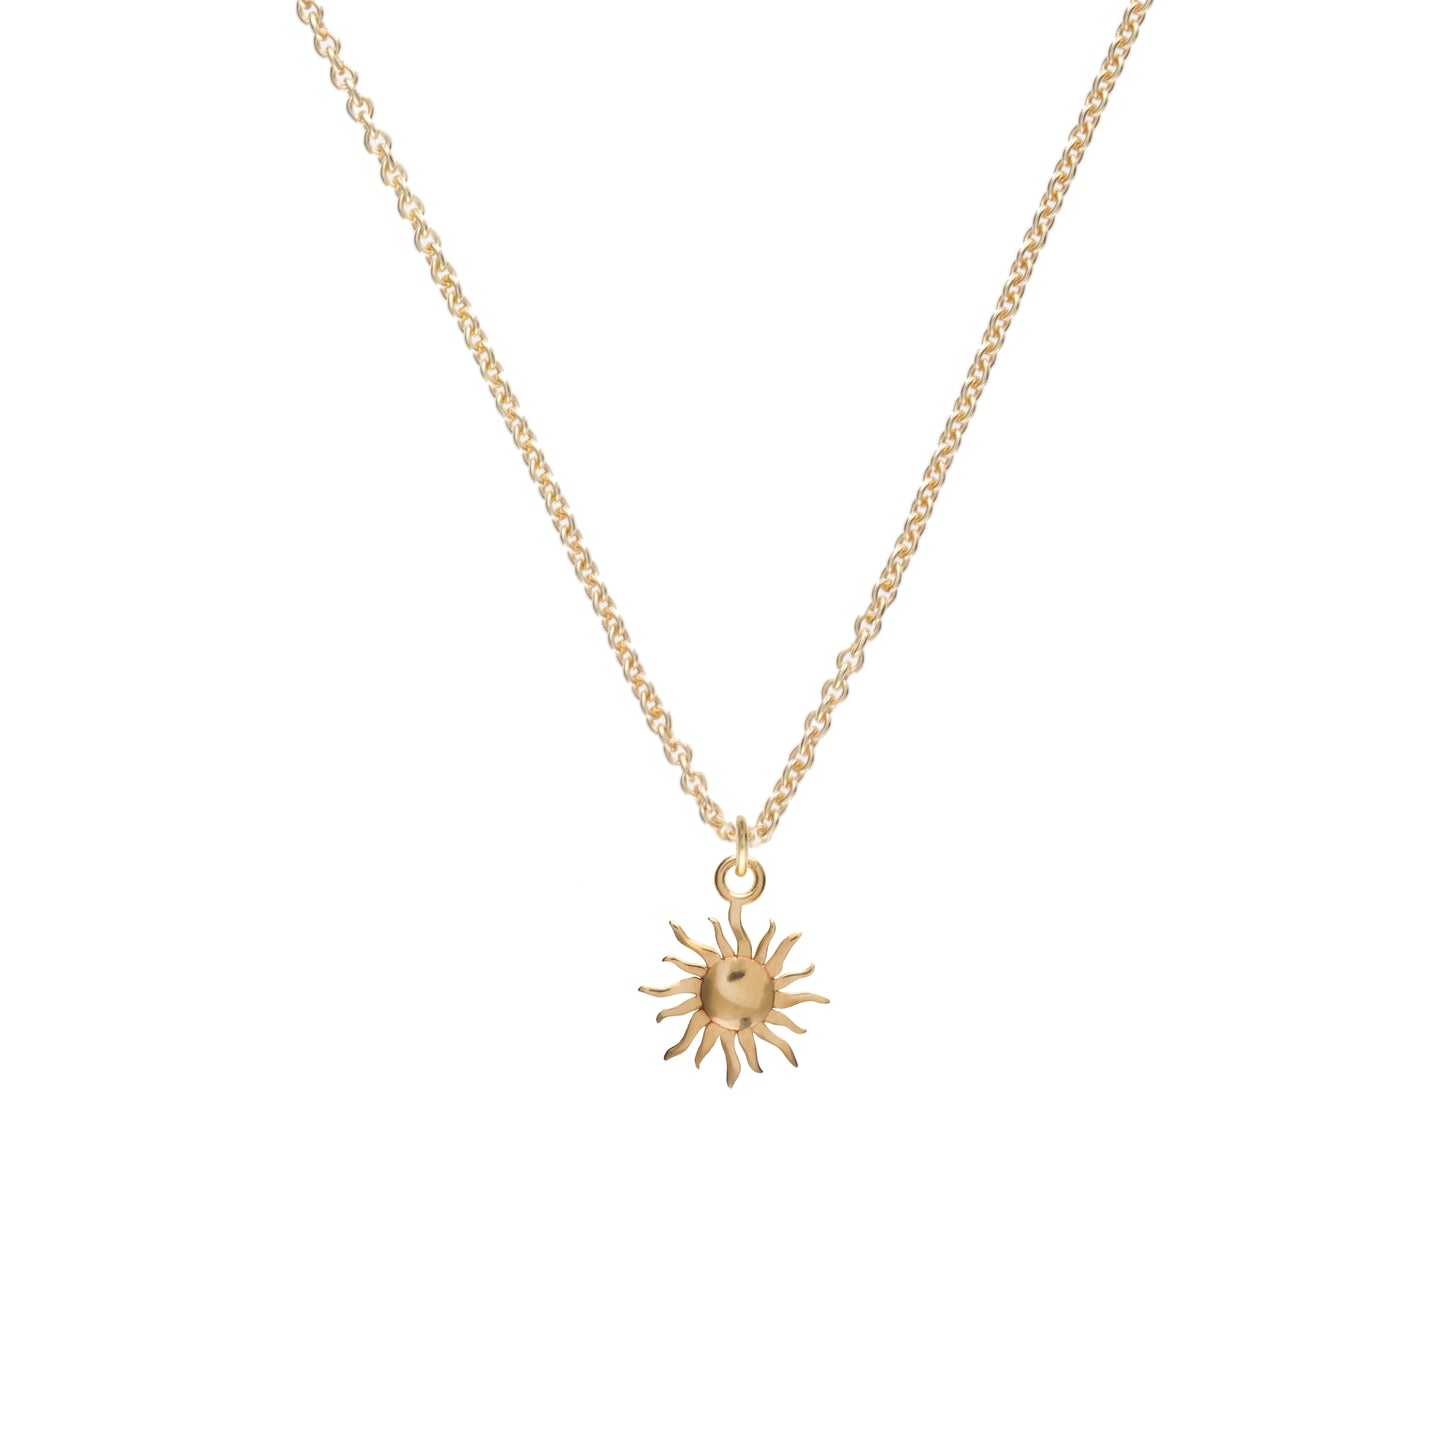 Halskette - SONNE, filigrane Kette mit Sonnensymbol Anhänger, 925 Silber/vergoldet